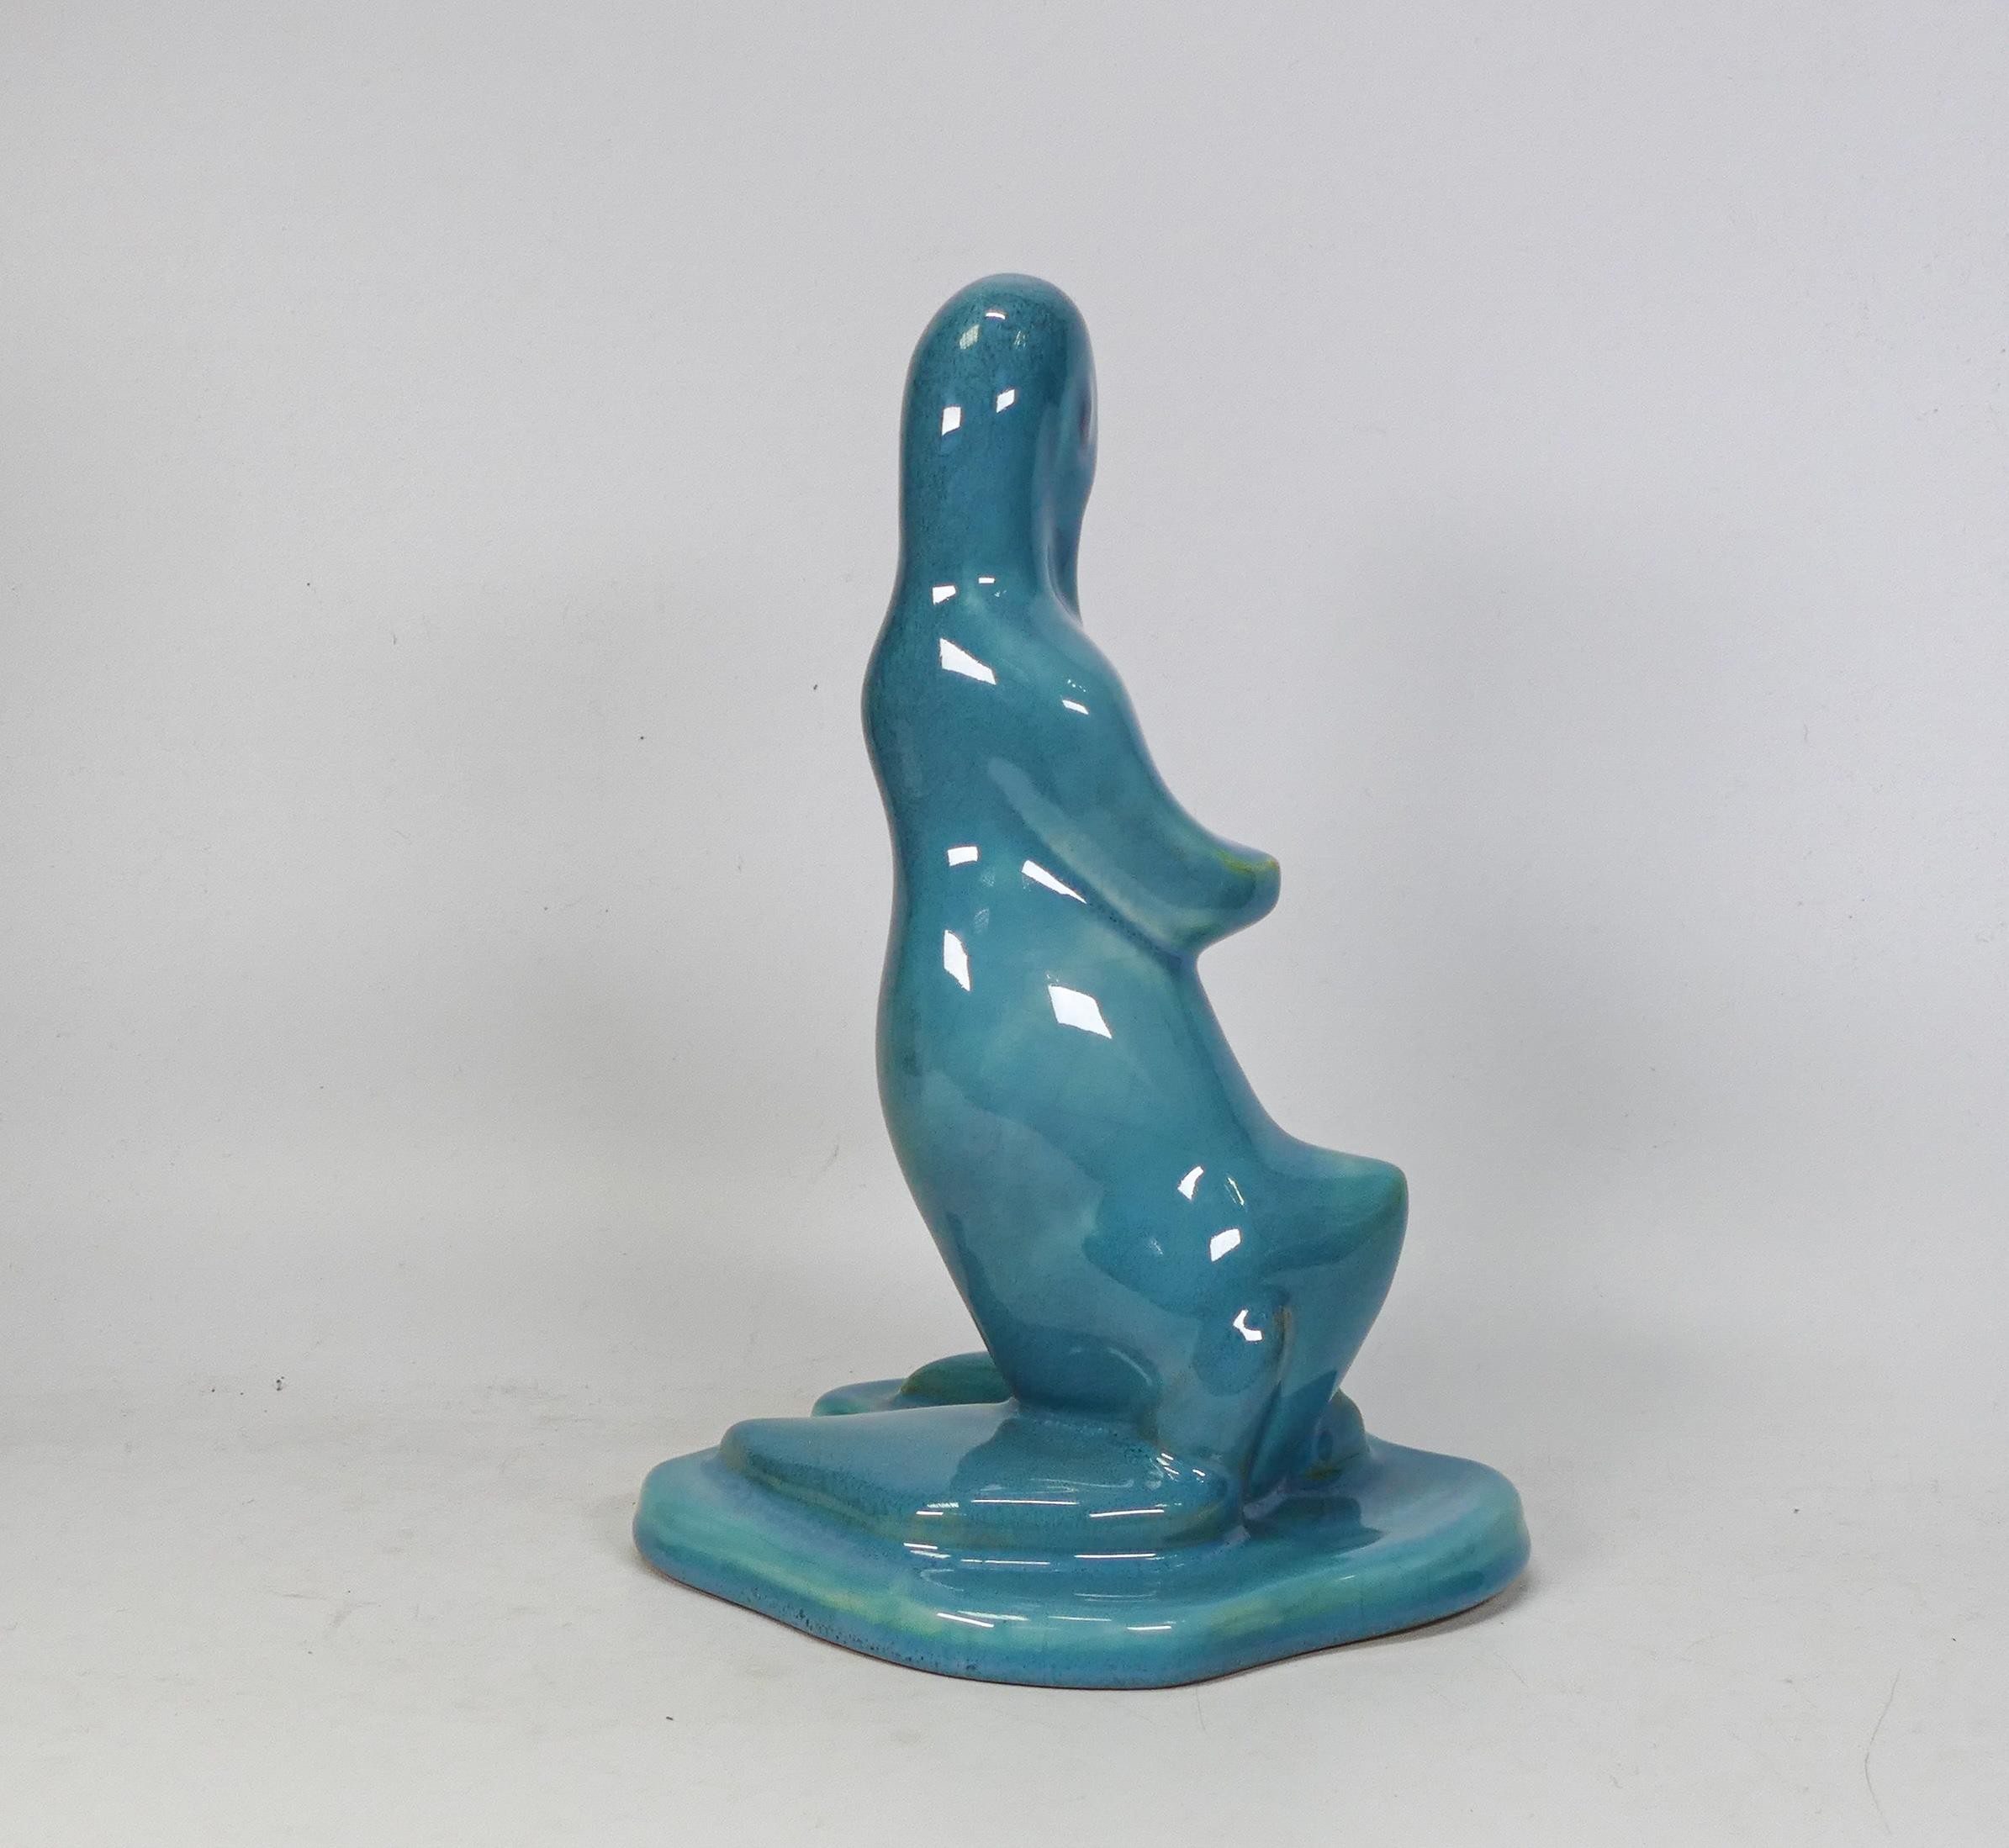 Beswick blue glazed model of a stylised duck on base 317, crazing, height 22cm - Image 2 of 3